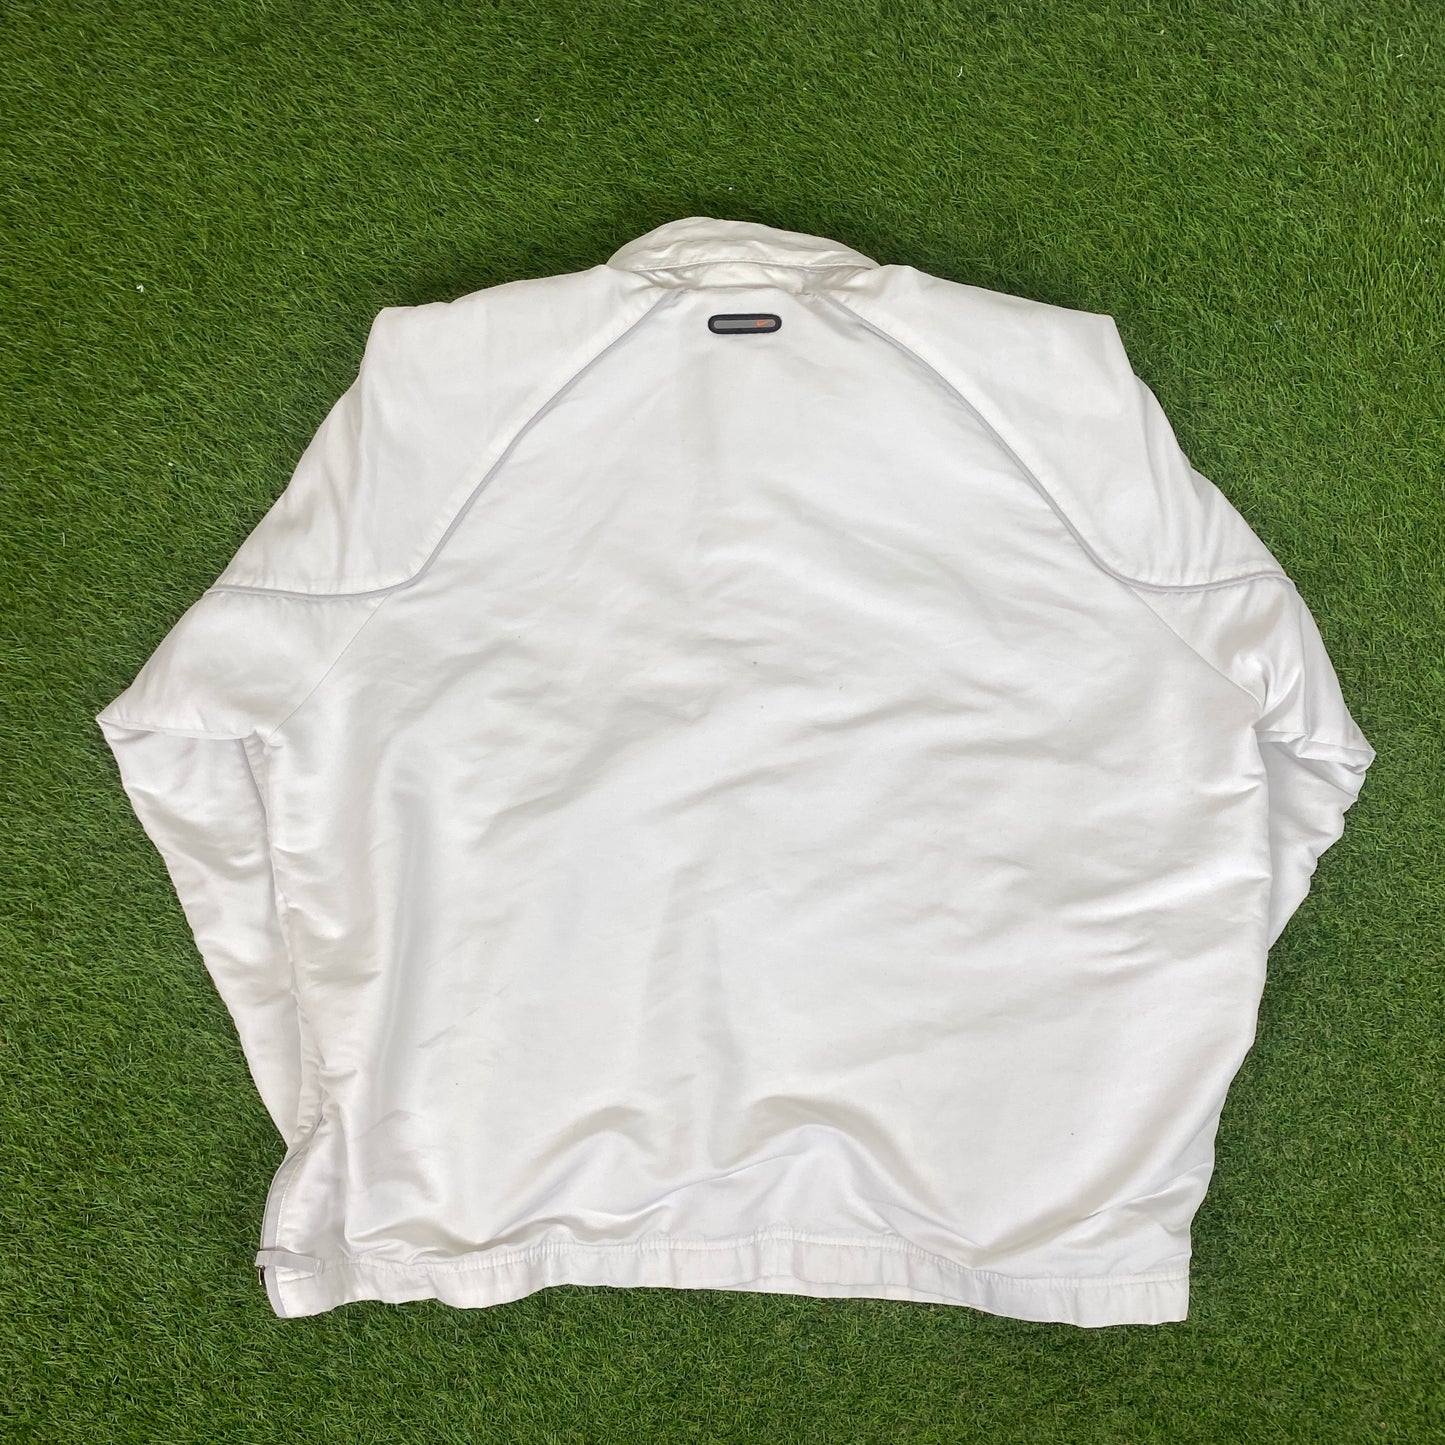 90s Nike Piping Tracksuit Set Jacket + Joggers White XL